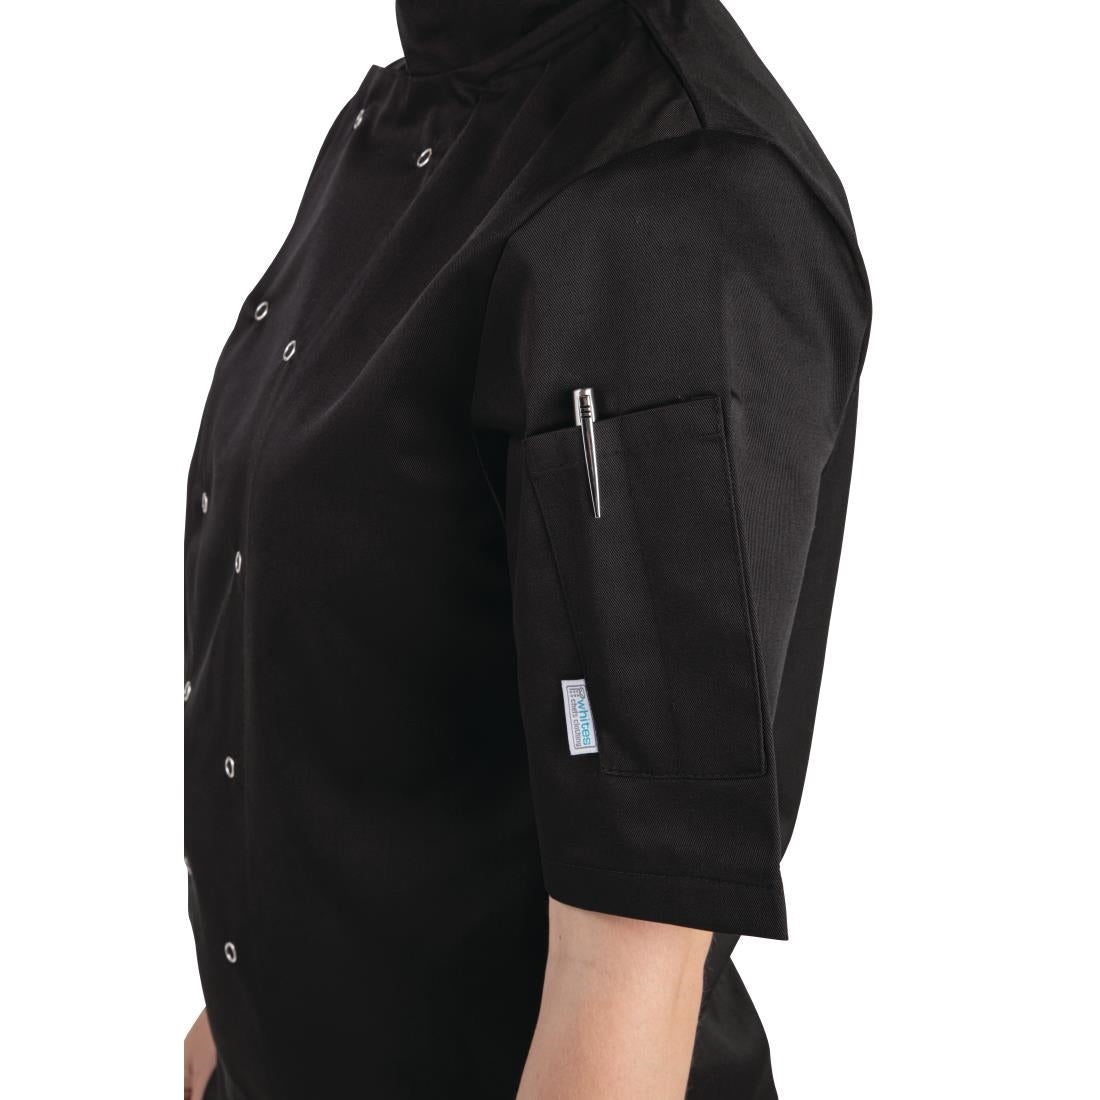 A439-S Whites Vegas Unisex Chefs Jacket Short Sleeve Black S JD Catering Equipment Solutions Ltd